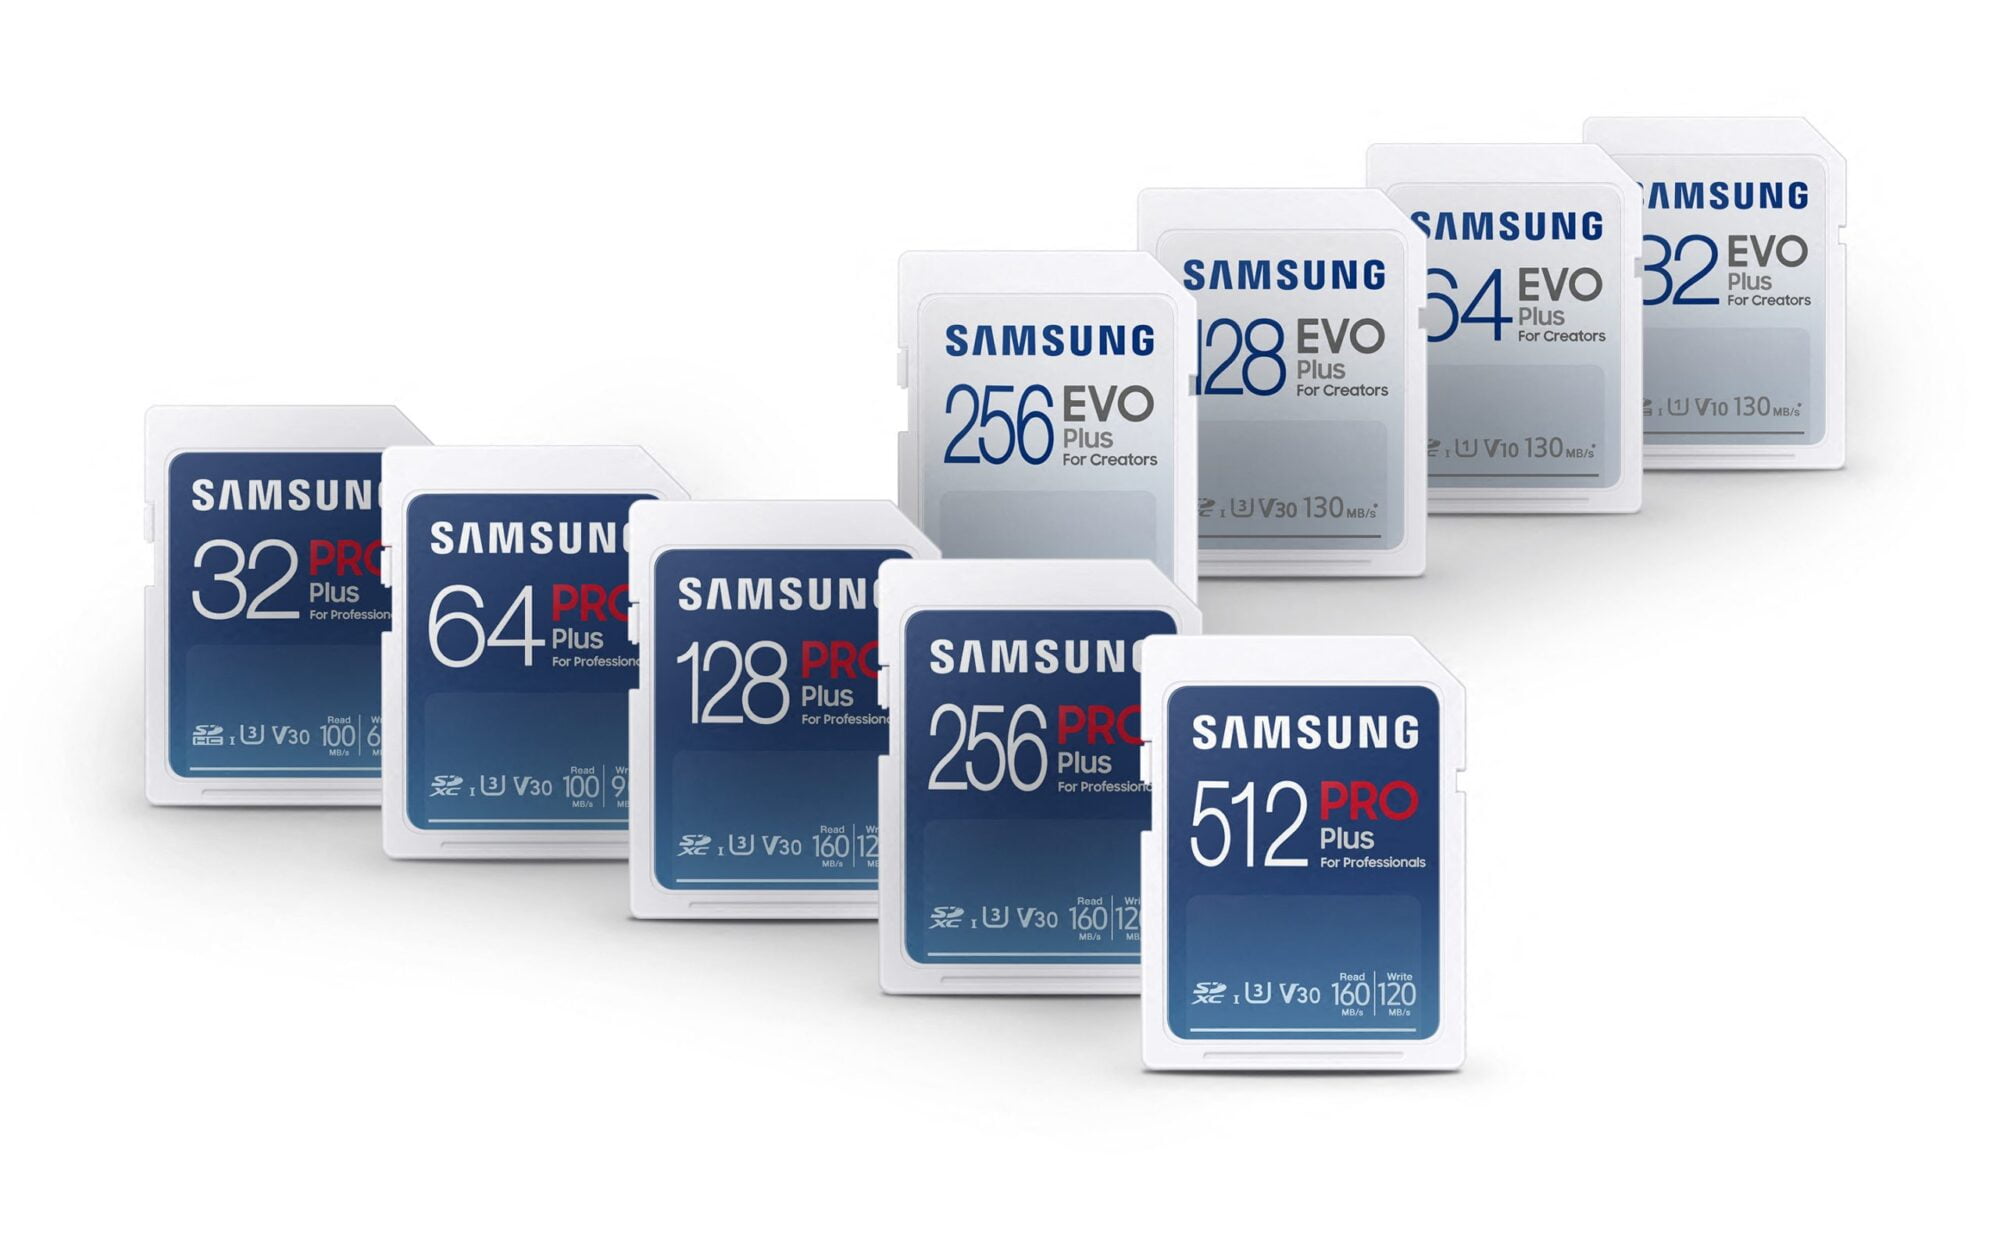 Samsung's memory cards